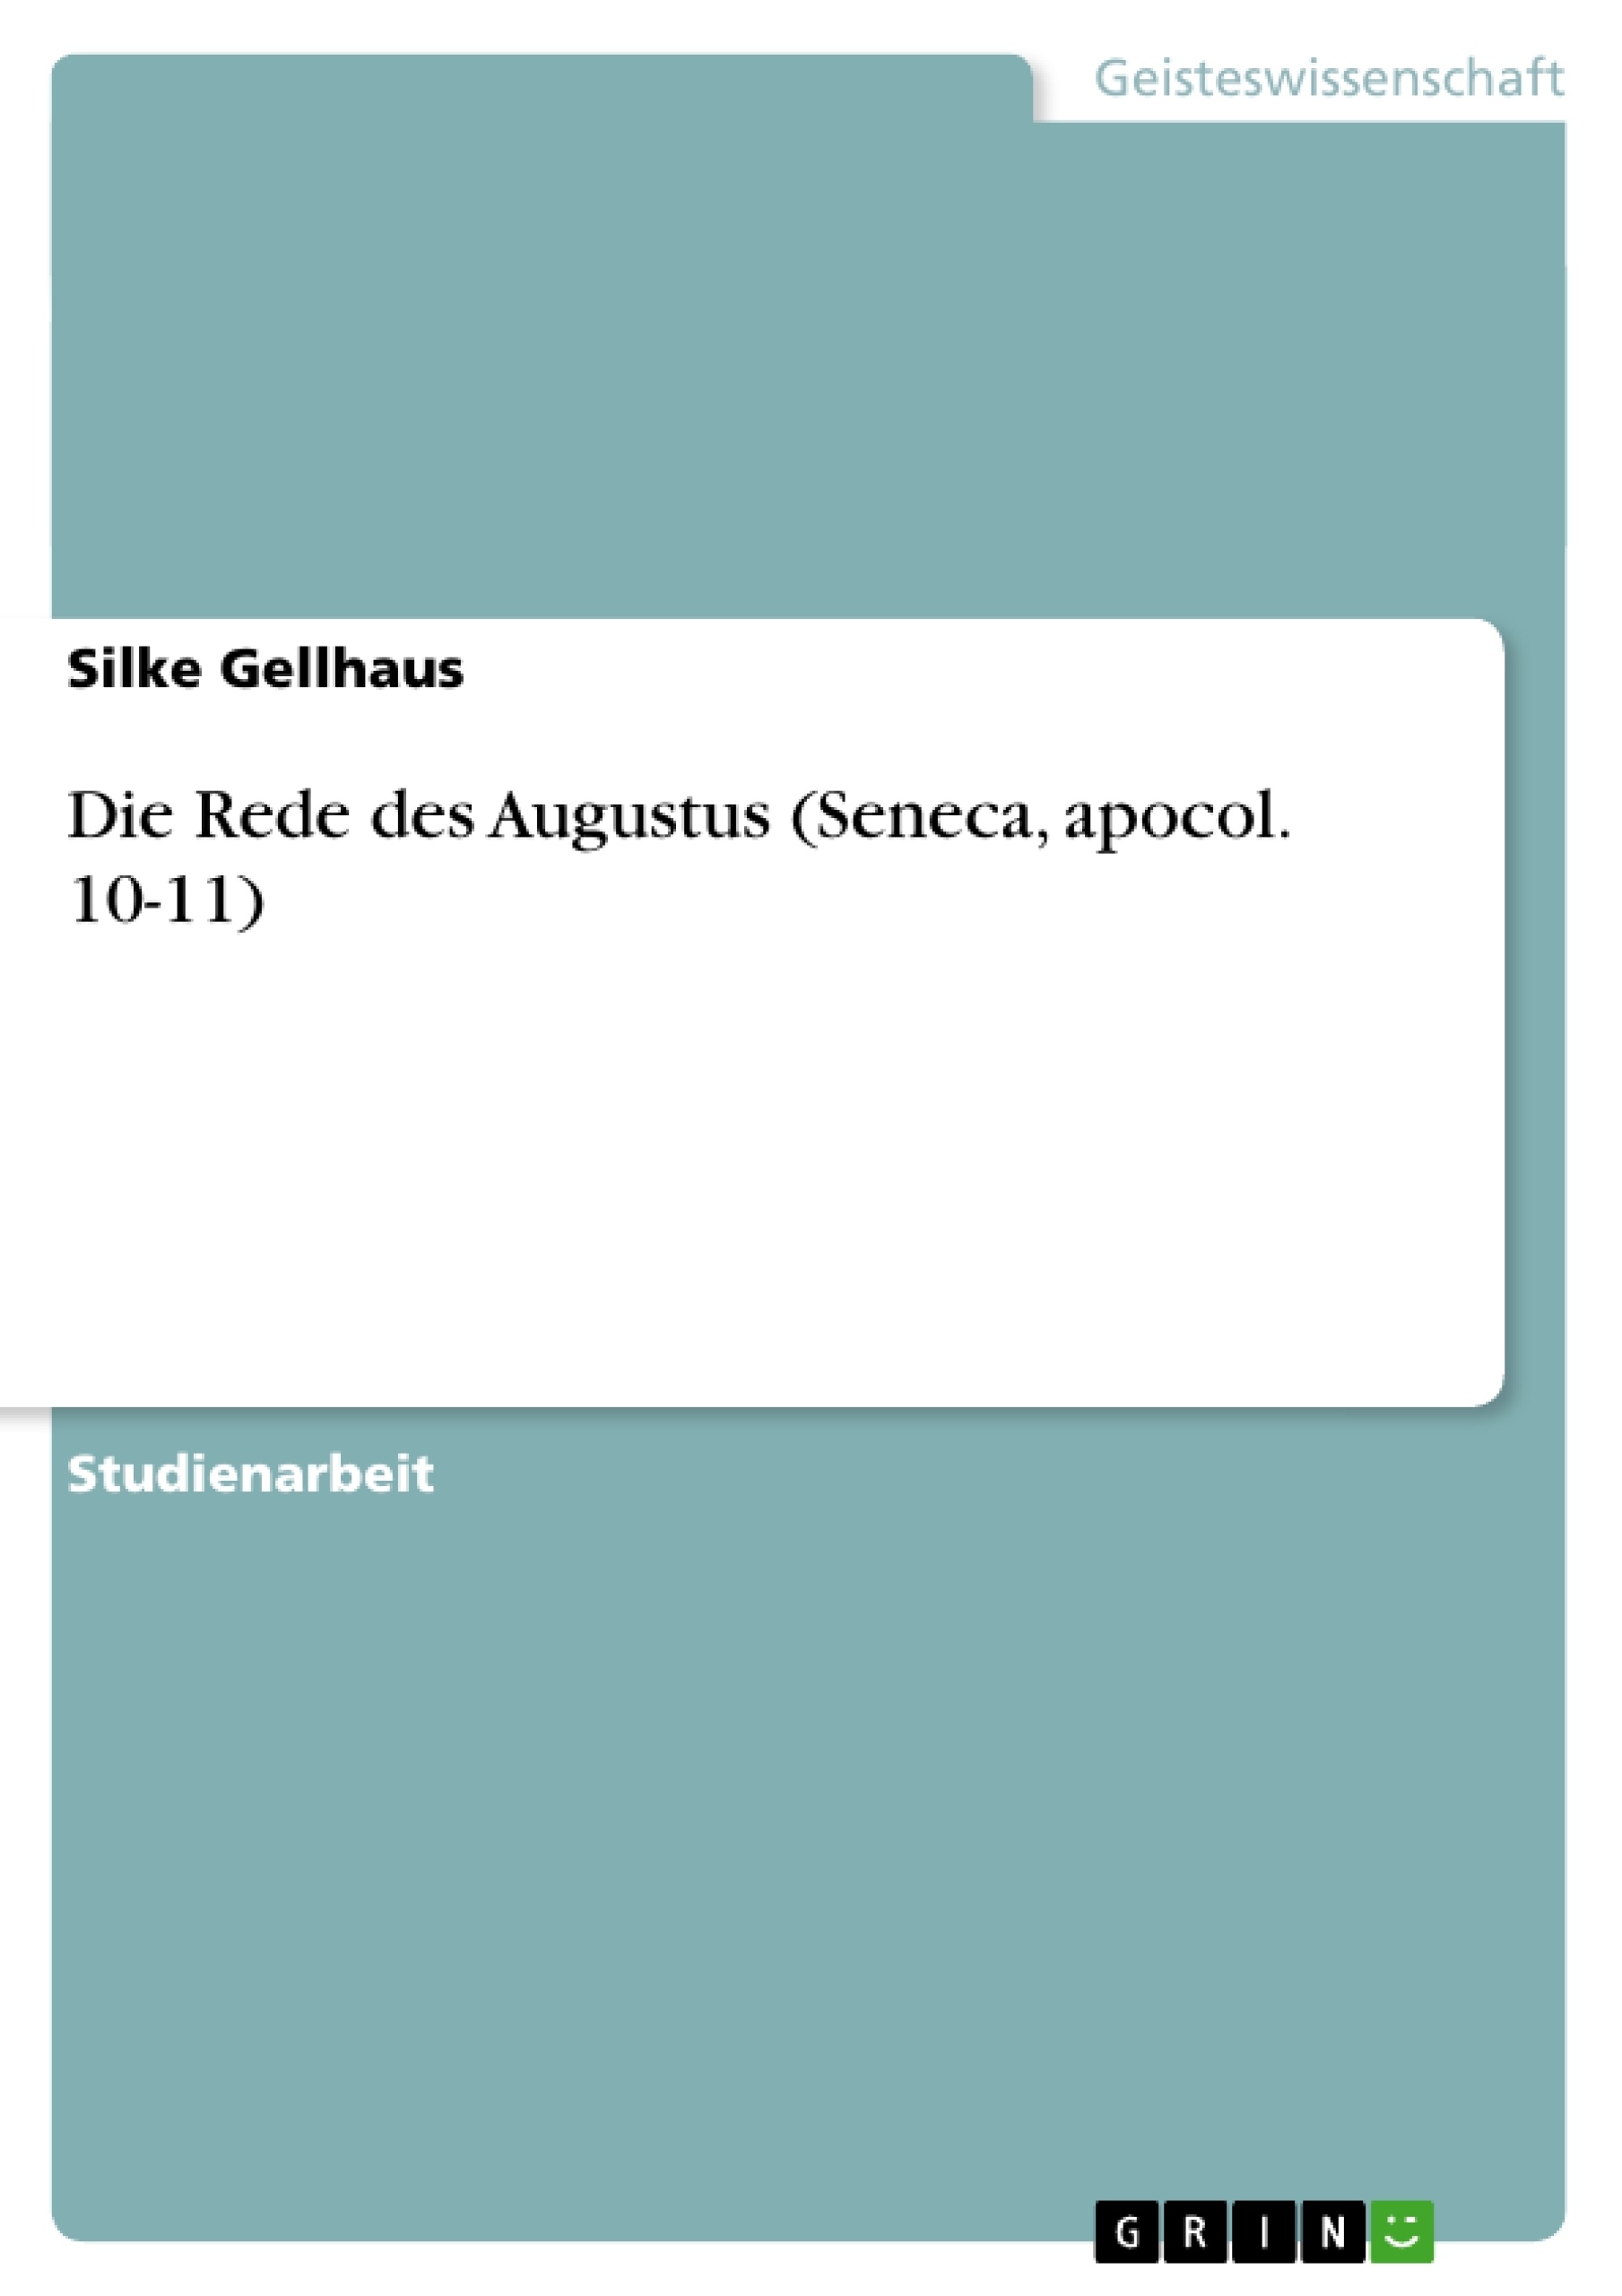 Titre: Die Rede des Augustus (Seneca, apocol. 10-11)